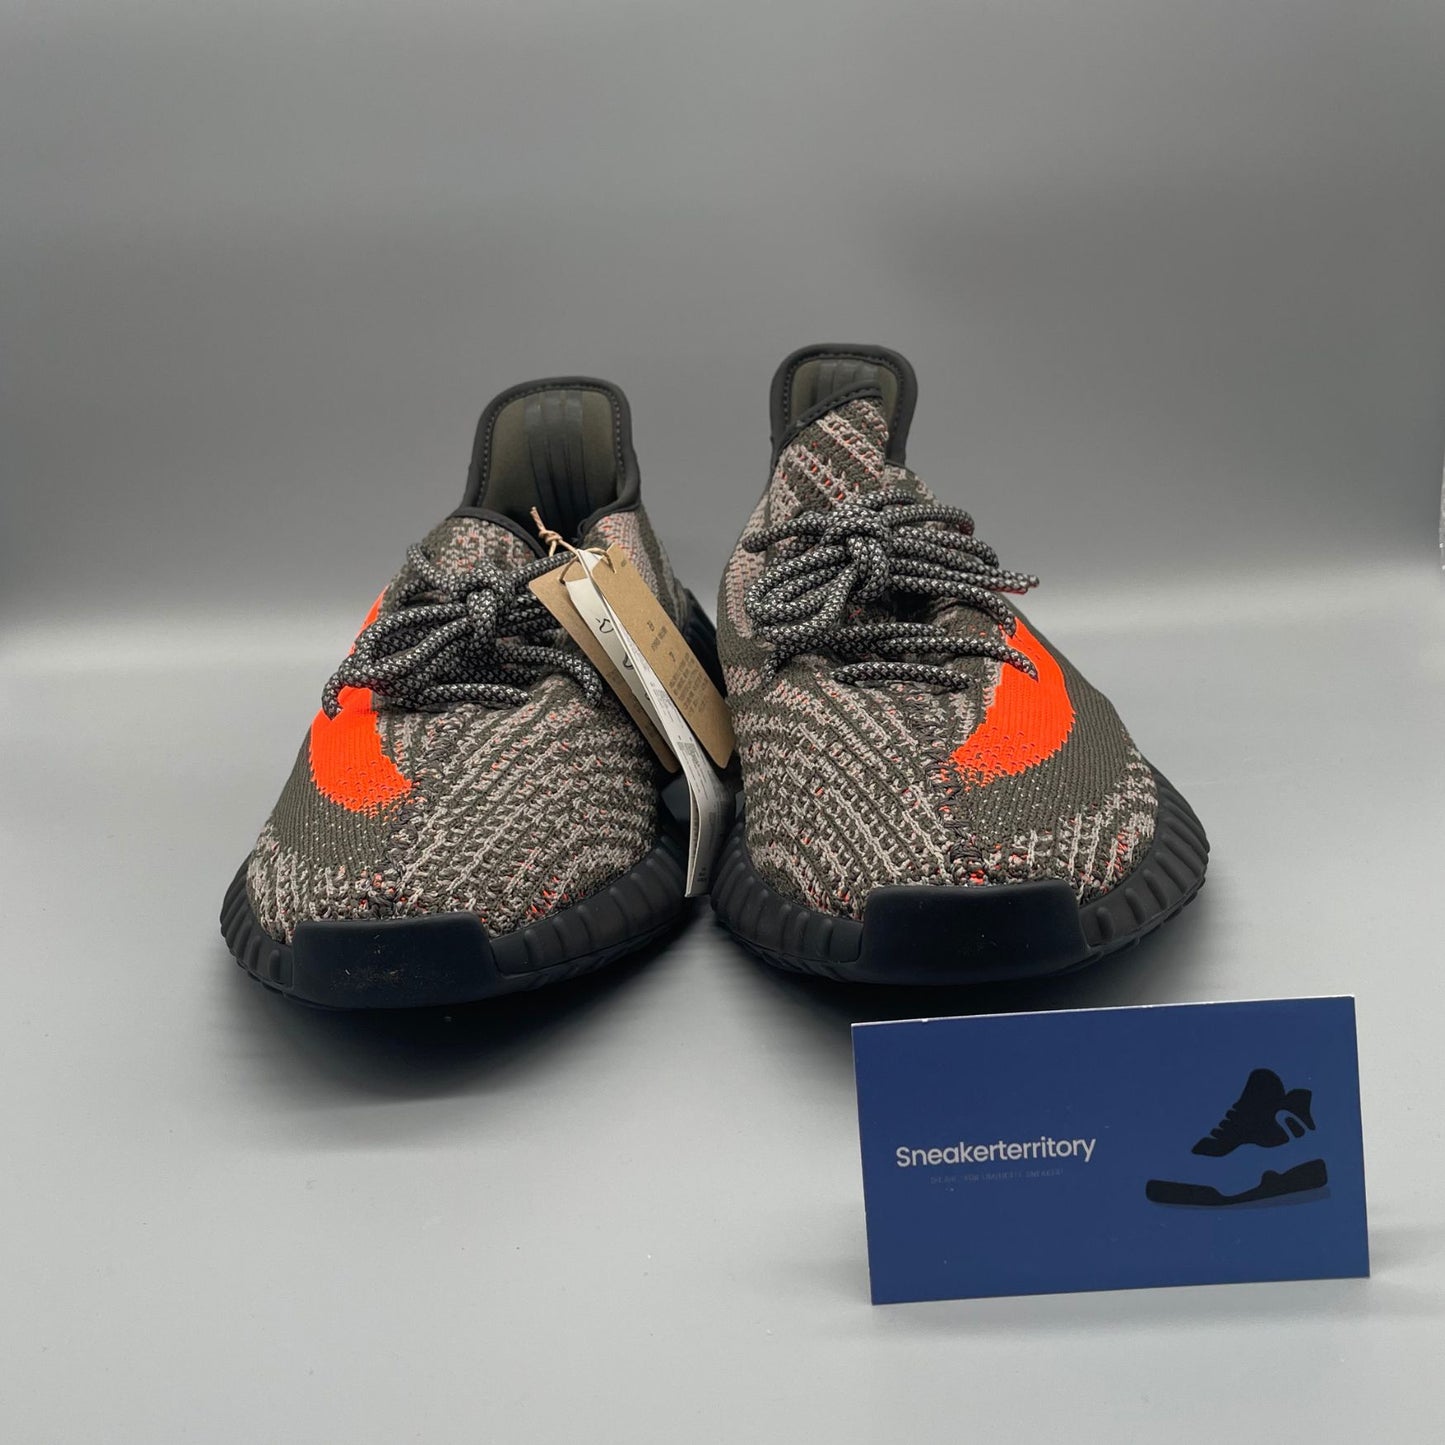 Adidas Yeezy Boost 350 V2 Carbon Beluga -Sneakerterritory; Sneaker Territory 5